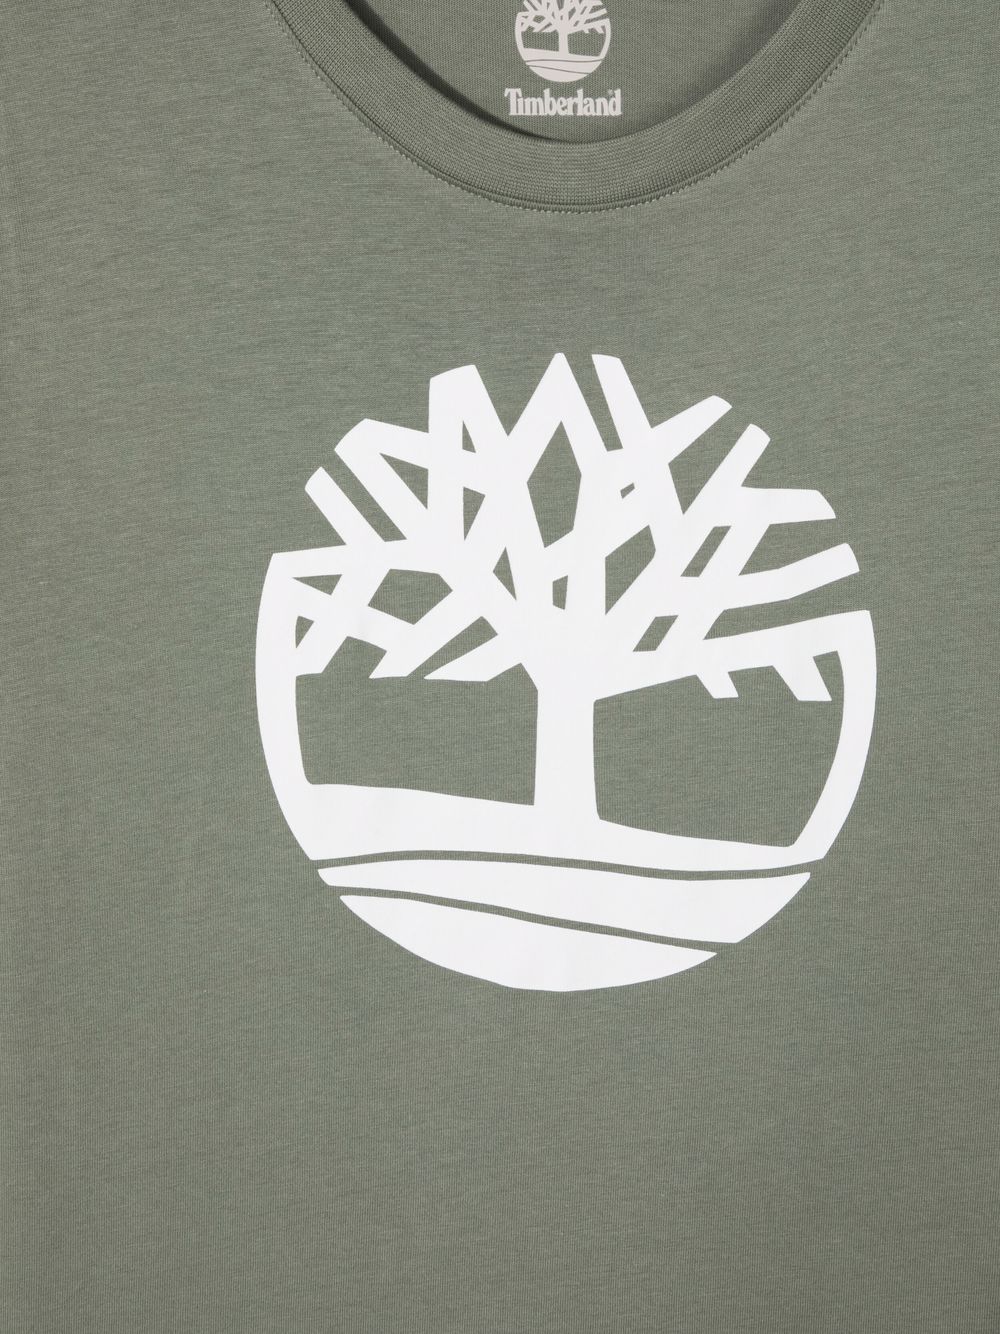 фото Timberland kids футболка с логотипом